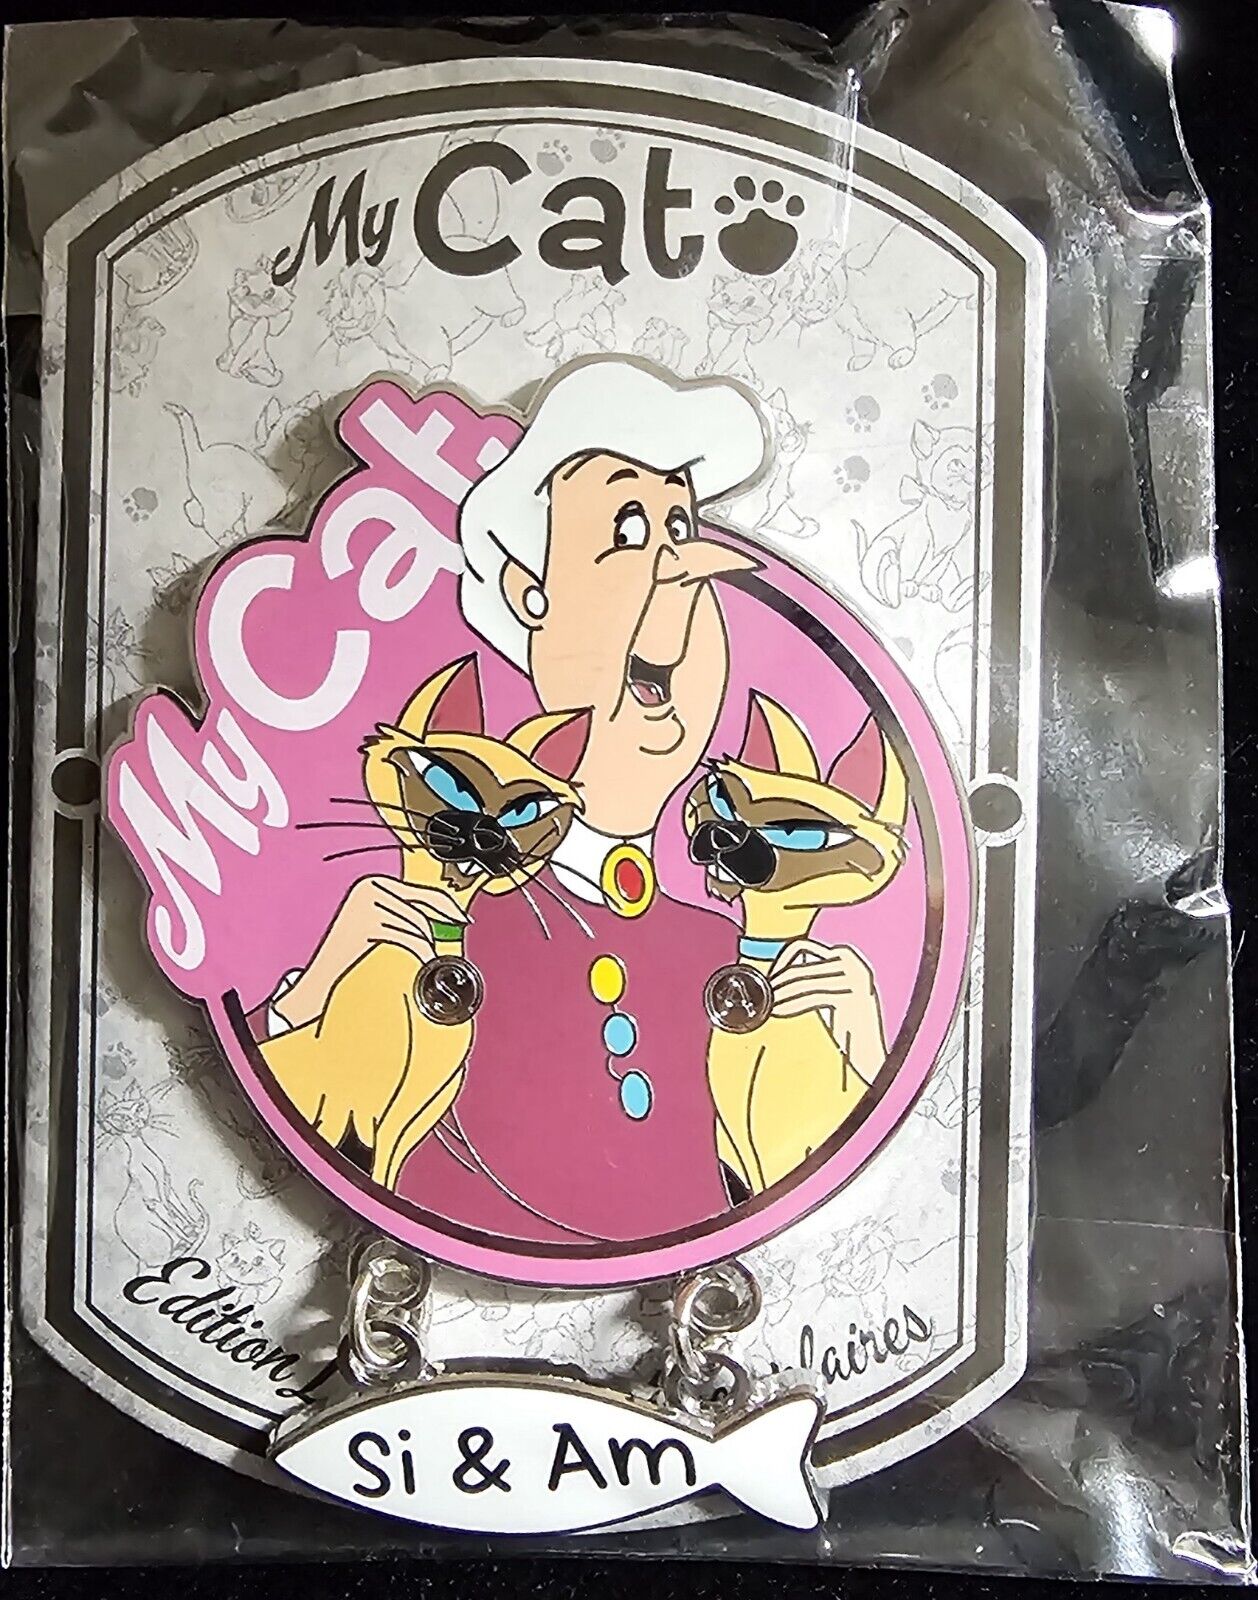 My Cat Pin Aunt Sara Si & Am Lady and The Tramp LE 700 Disneyland Paris 2018